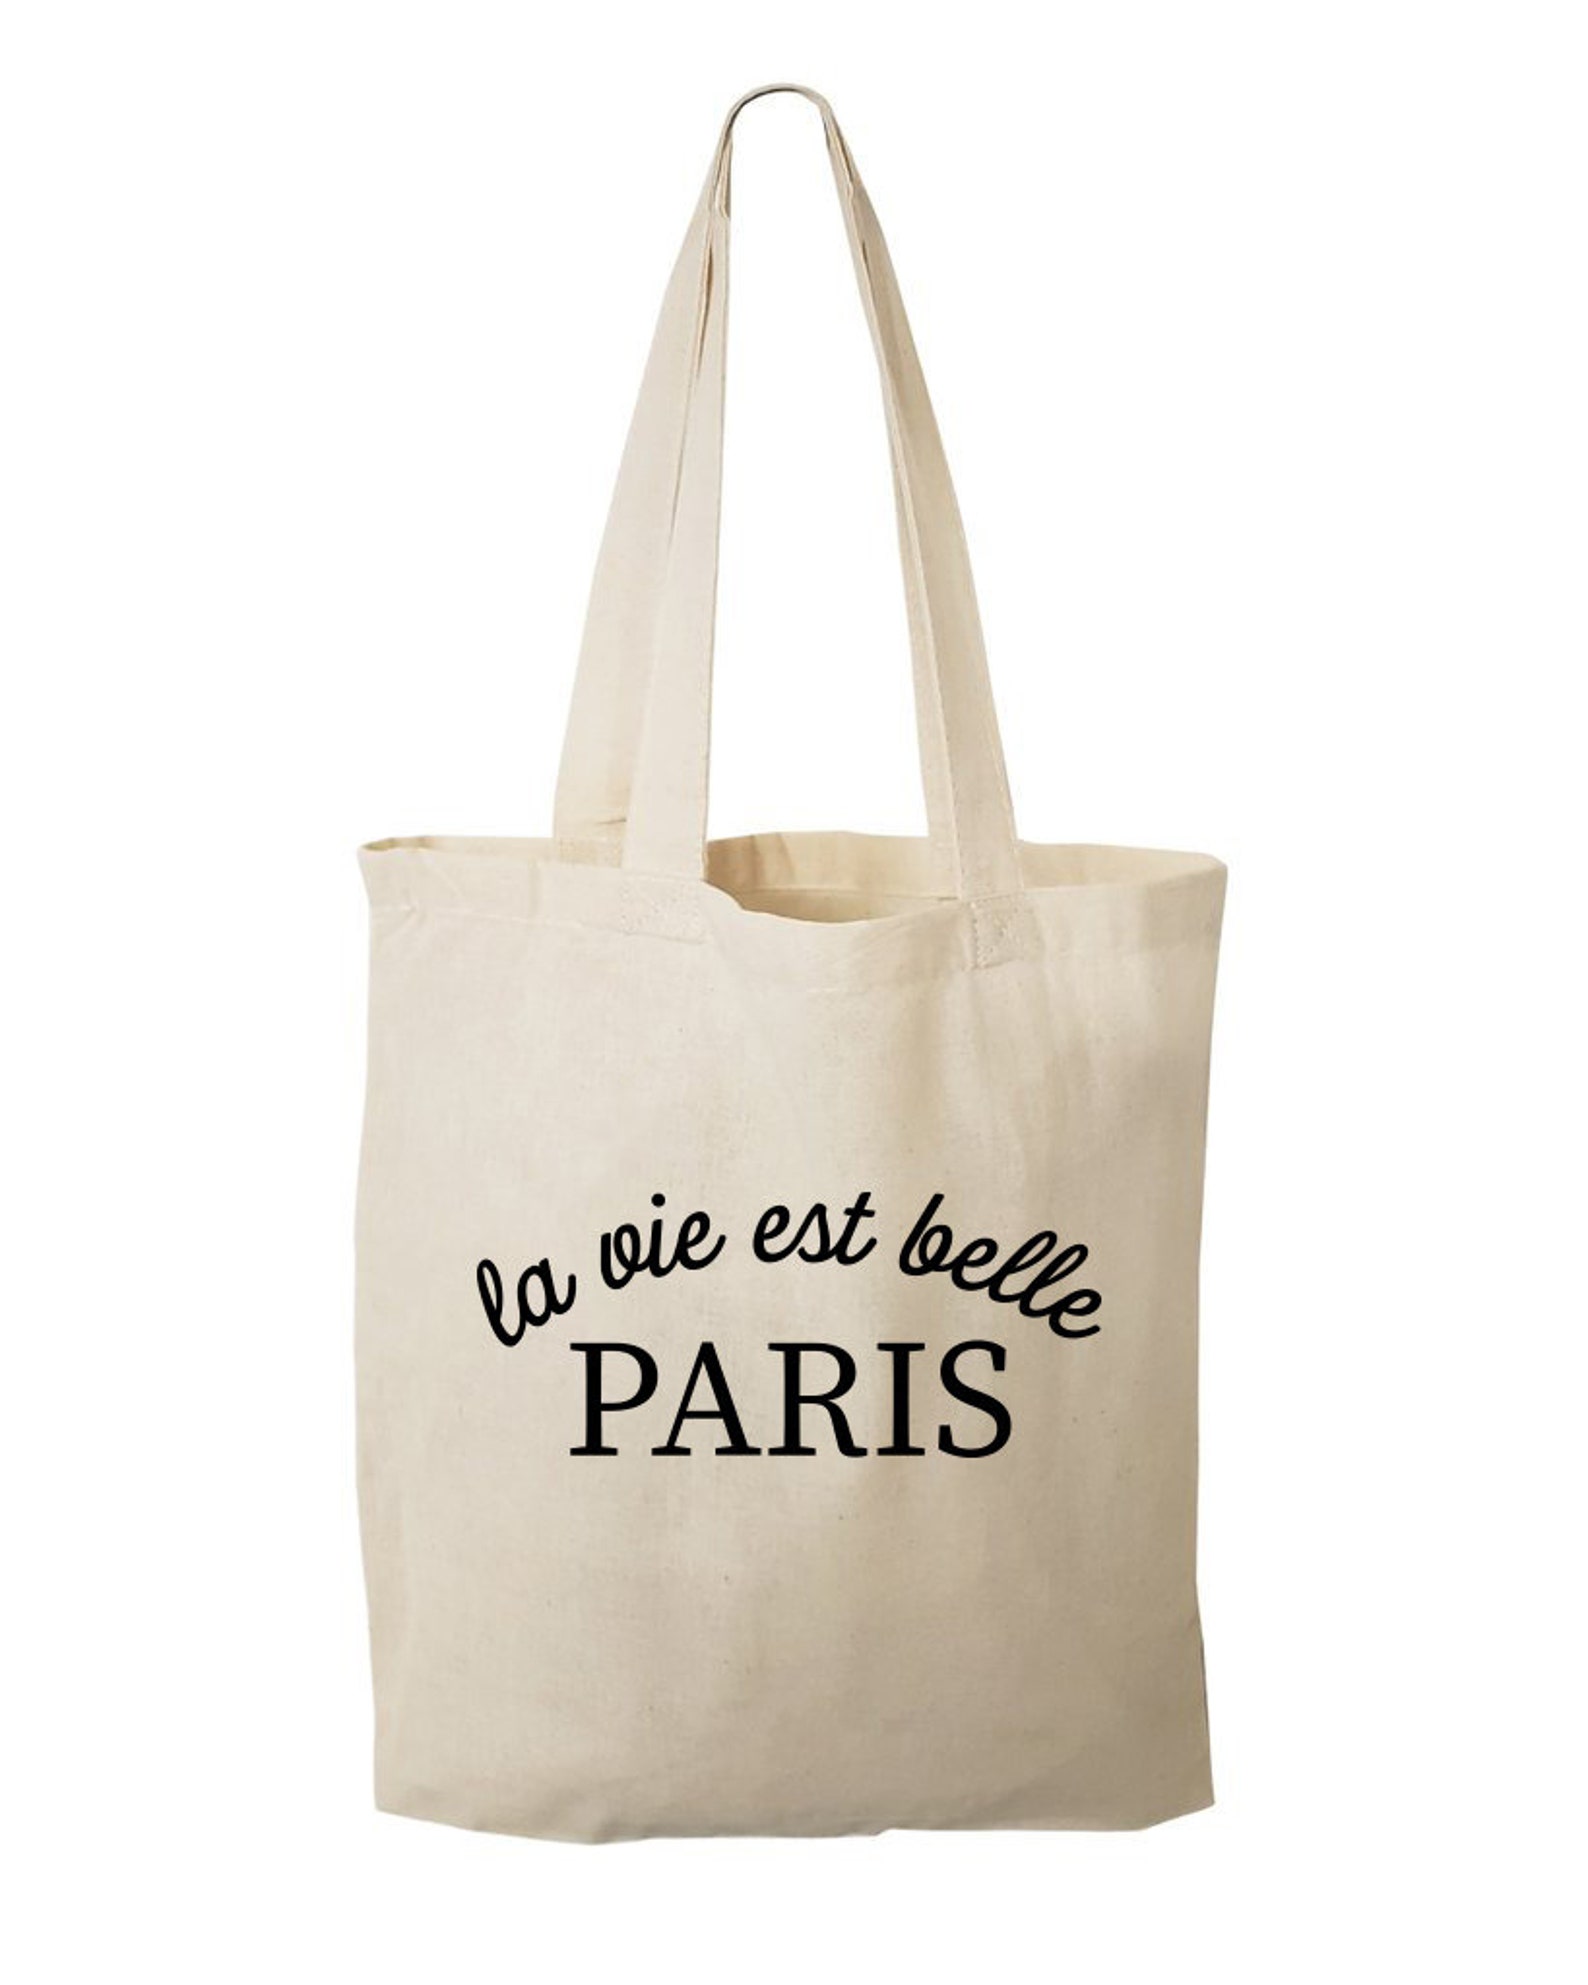 Paris Tote Bag French Tote Shopping Bag Gift for Paris | Etsy